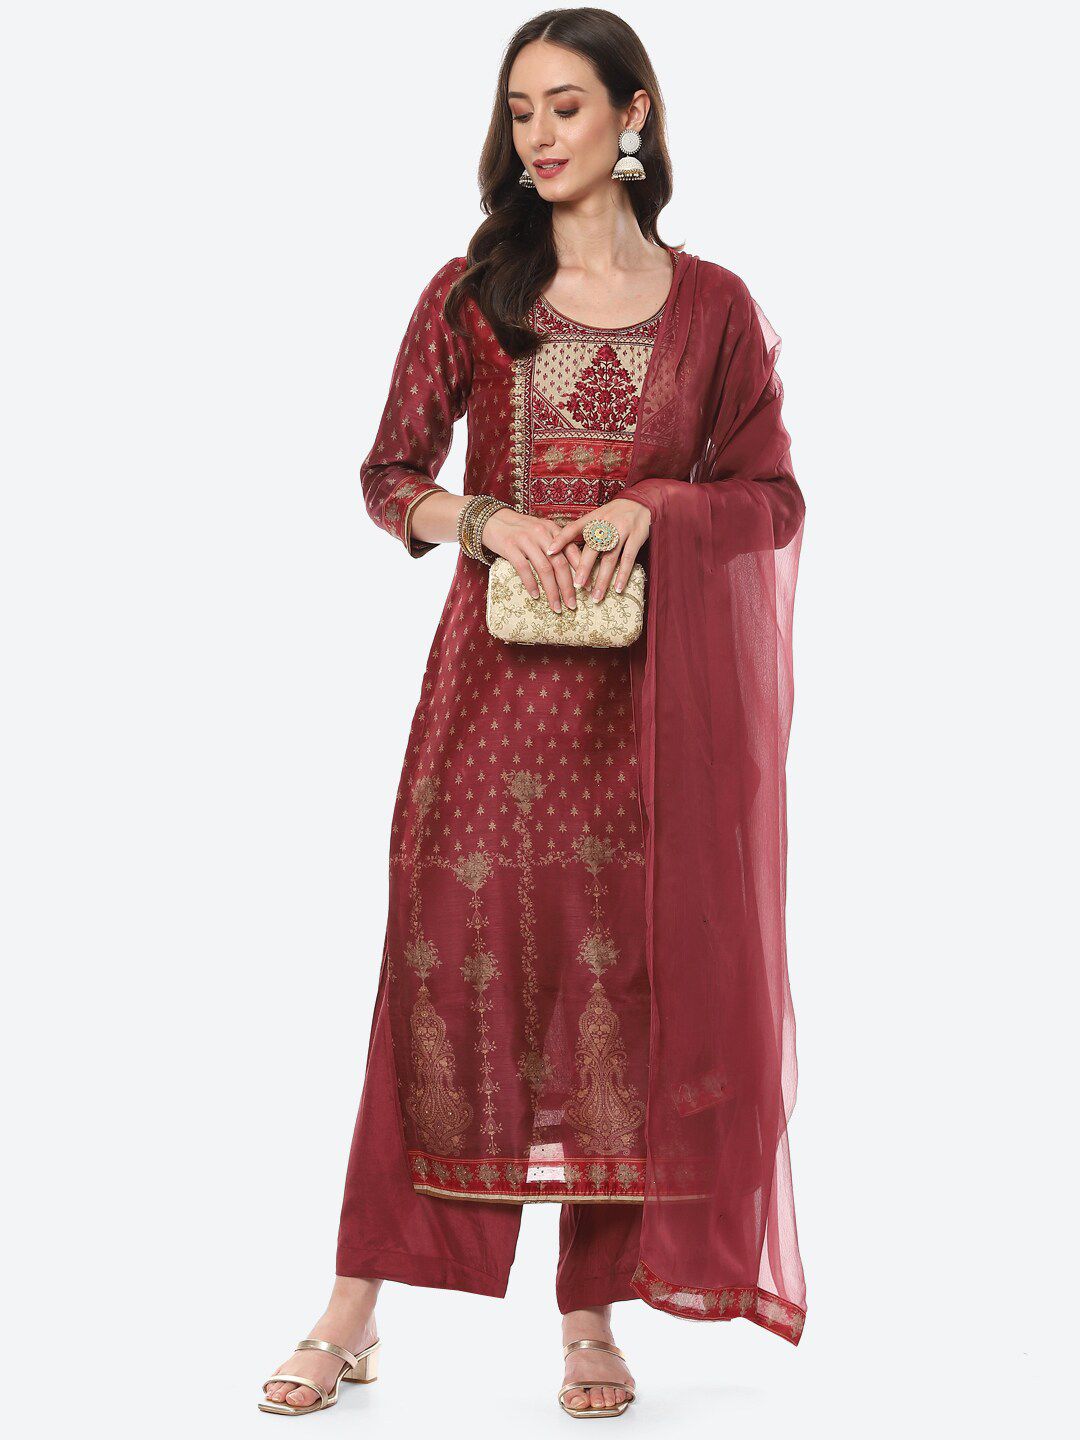 Meena Bazaar Maroon & Beige Embroidered Unstitched Dress Material Price in India